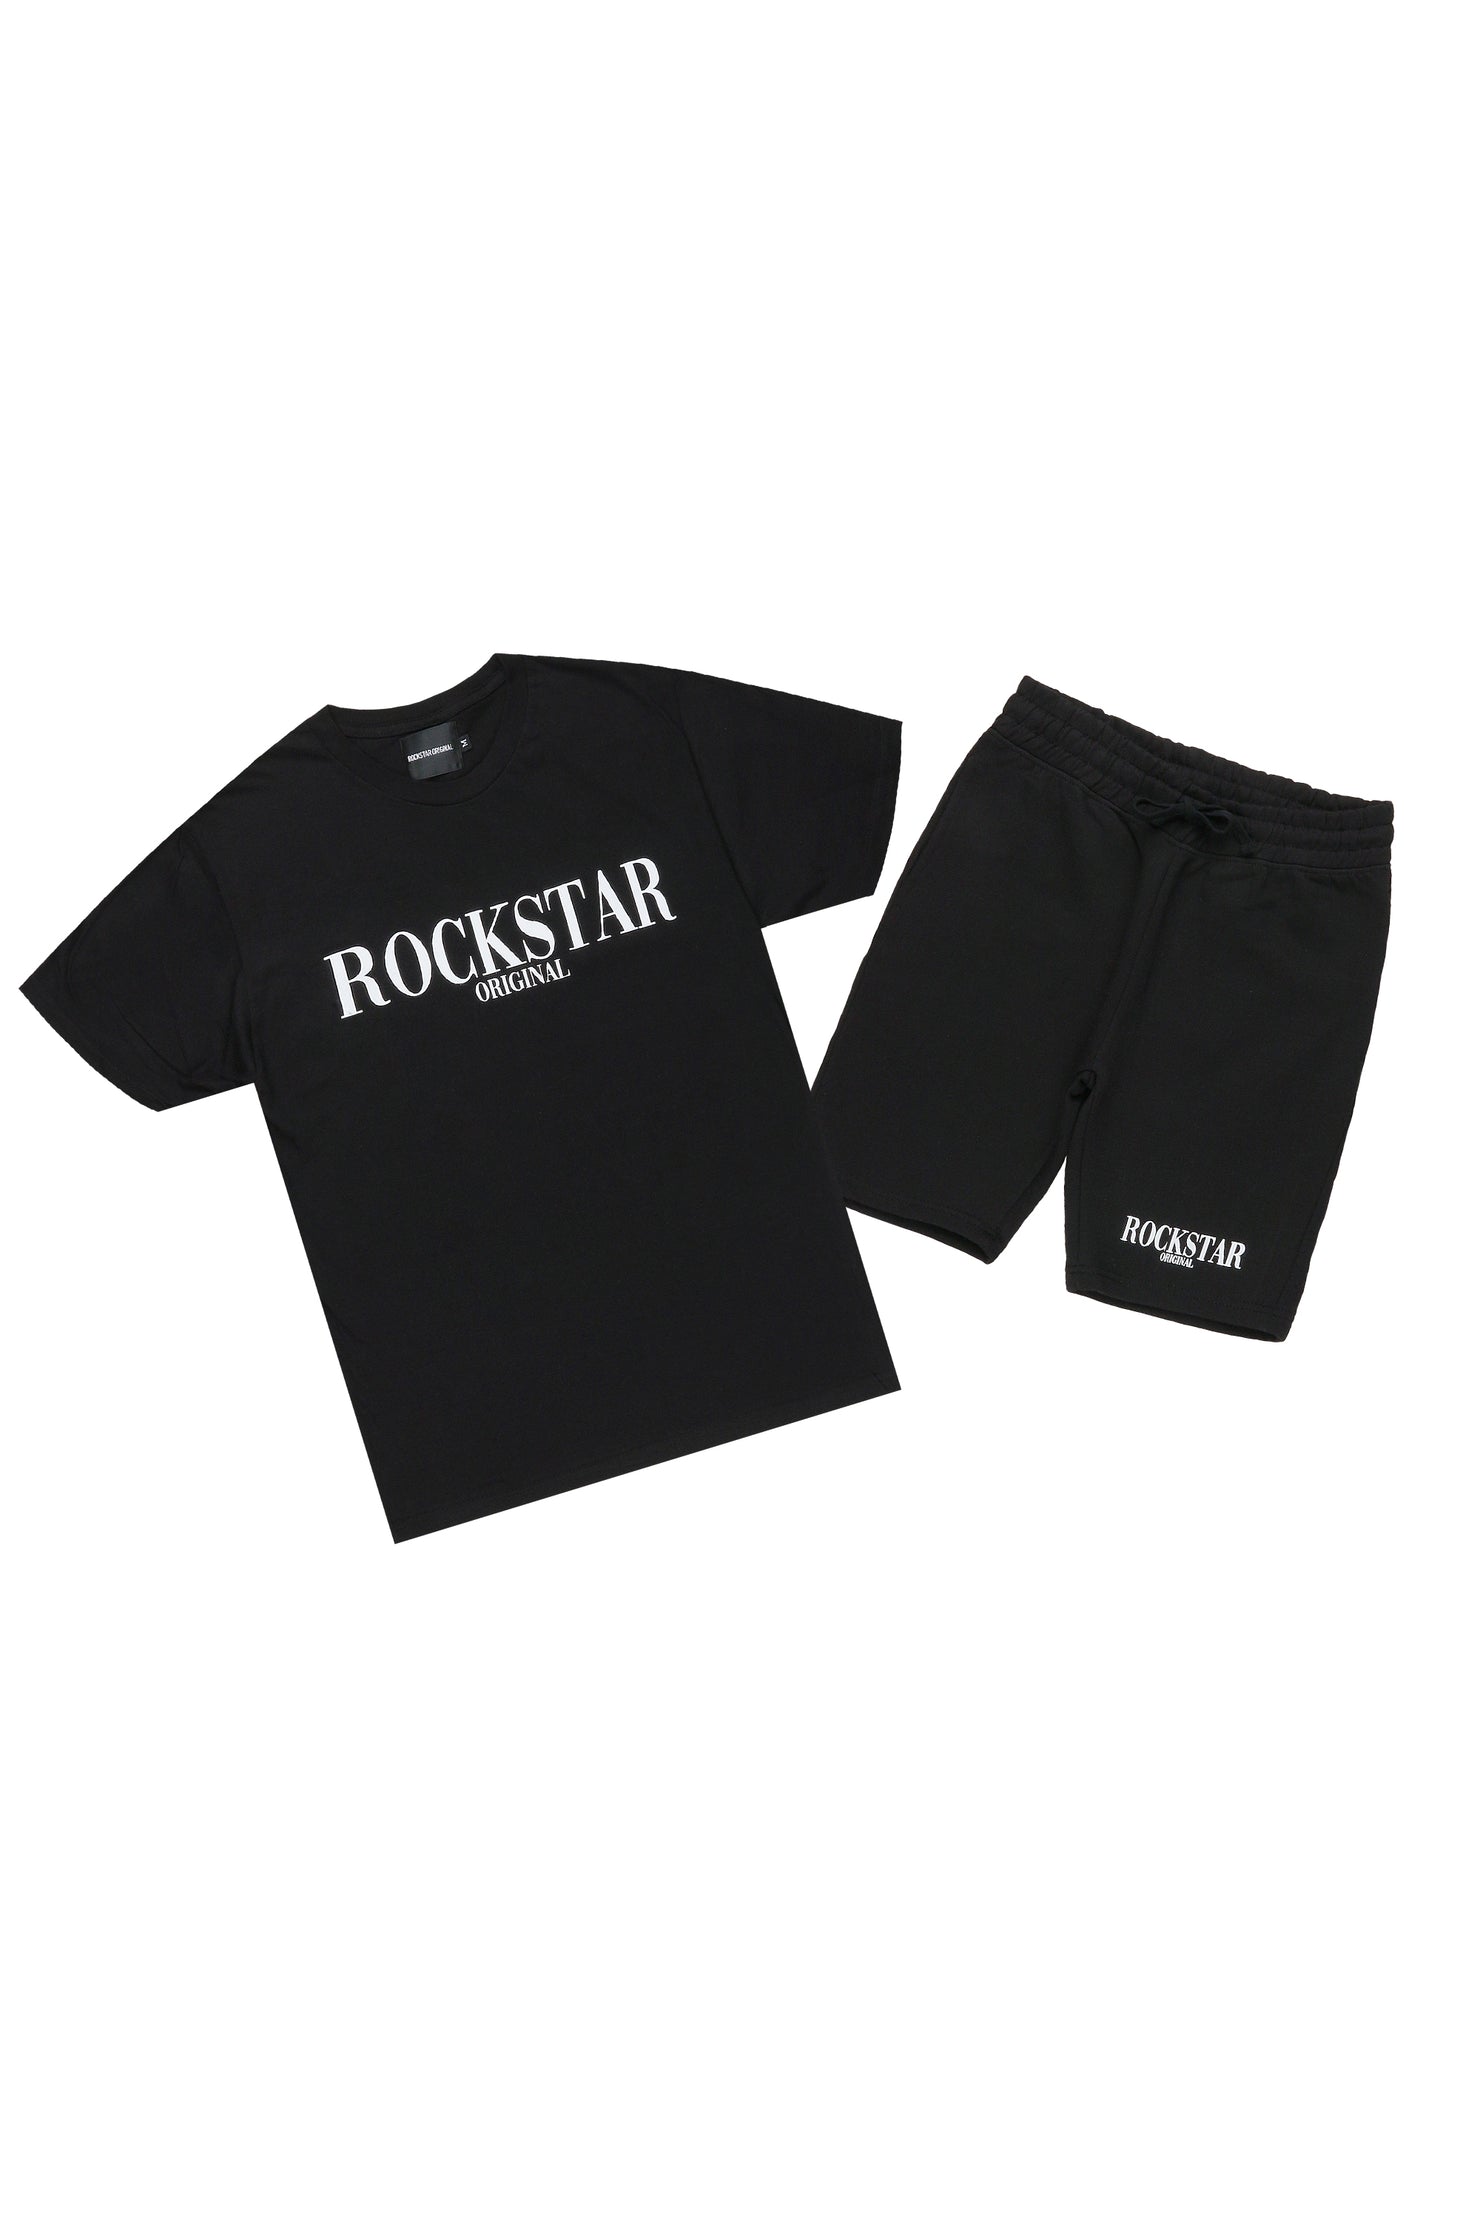 Octavio Black T-Shirt/Short Set